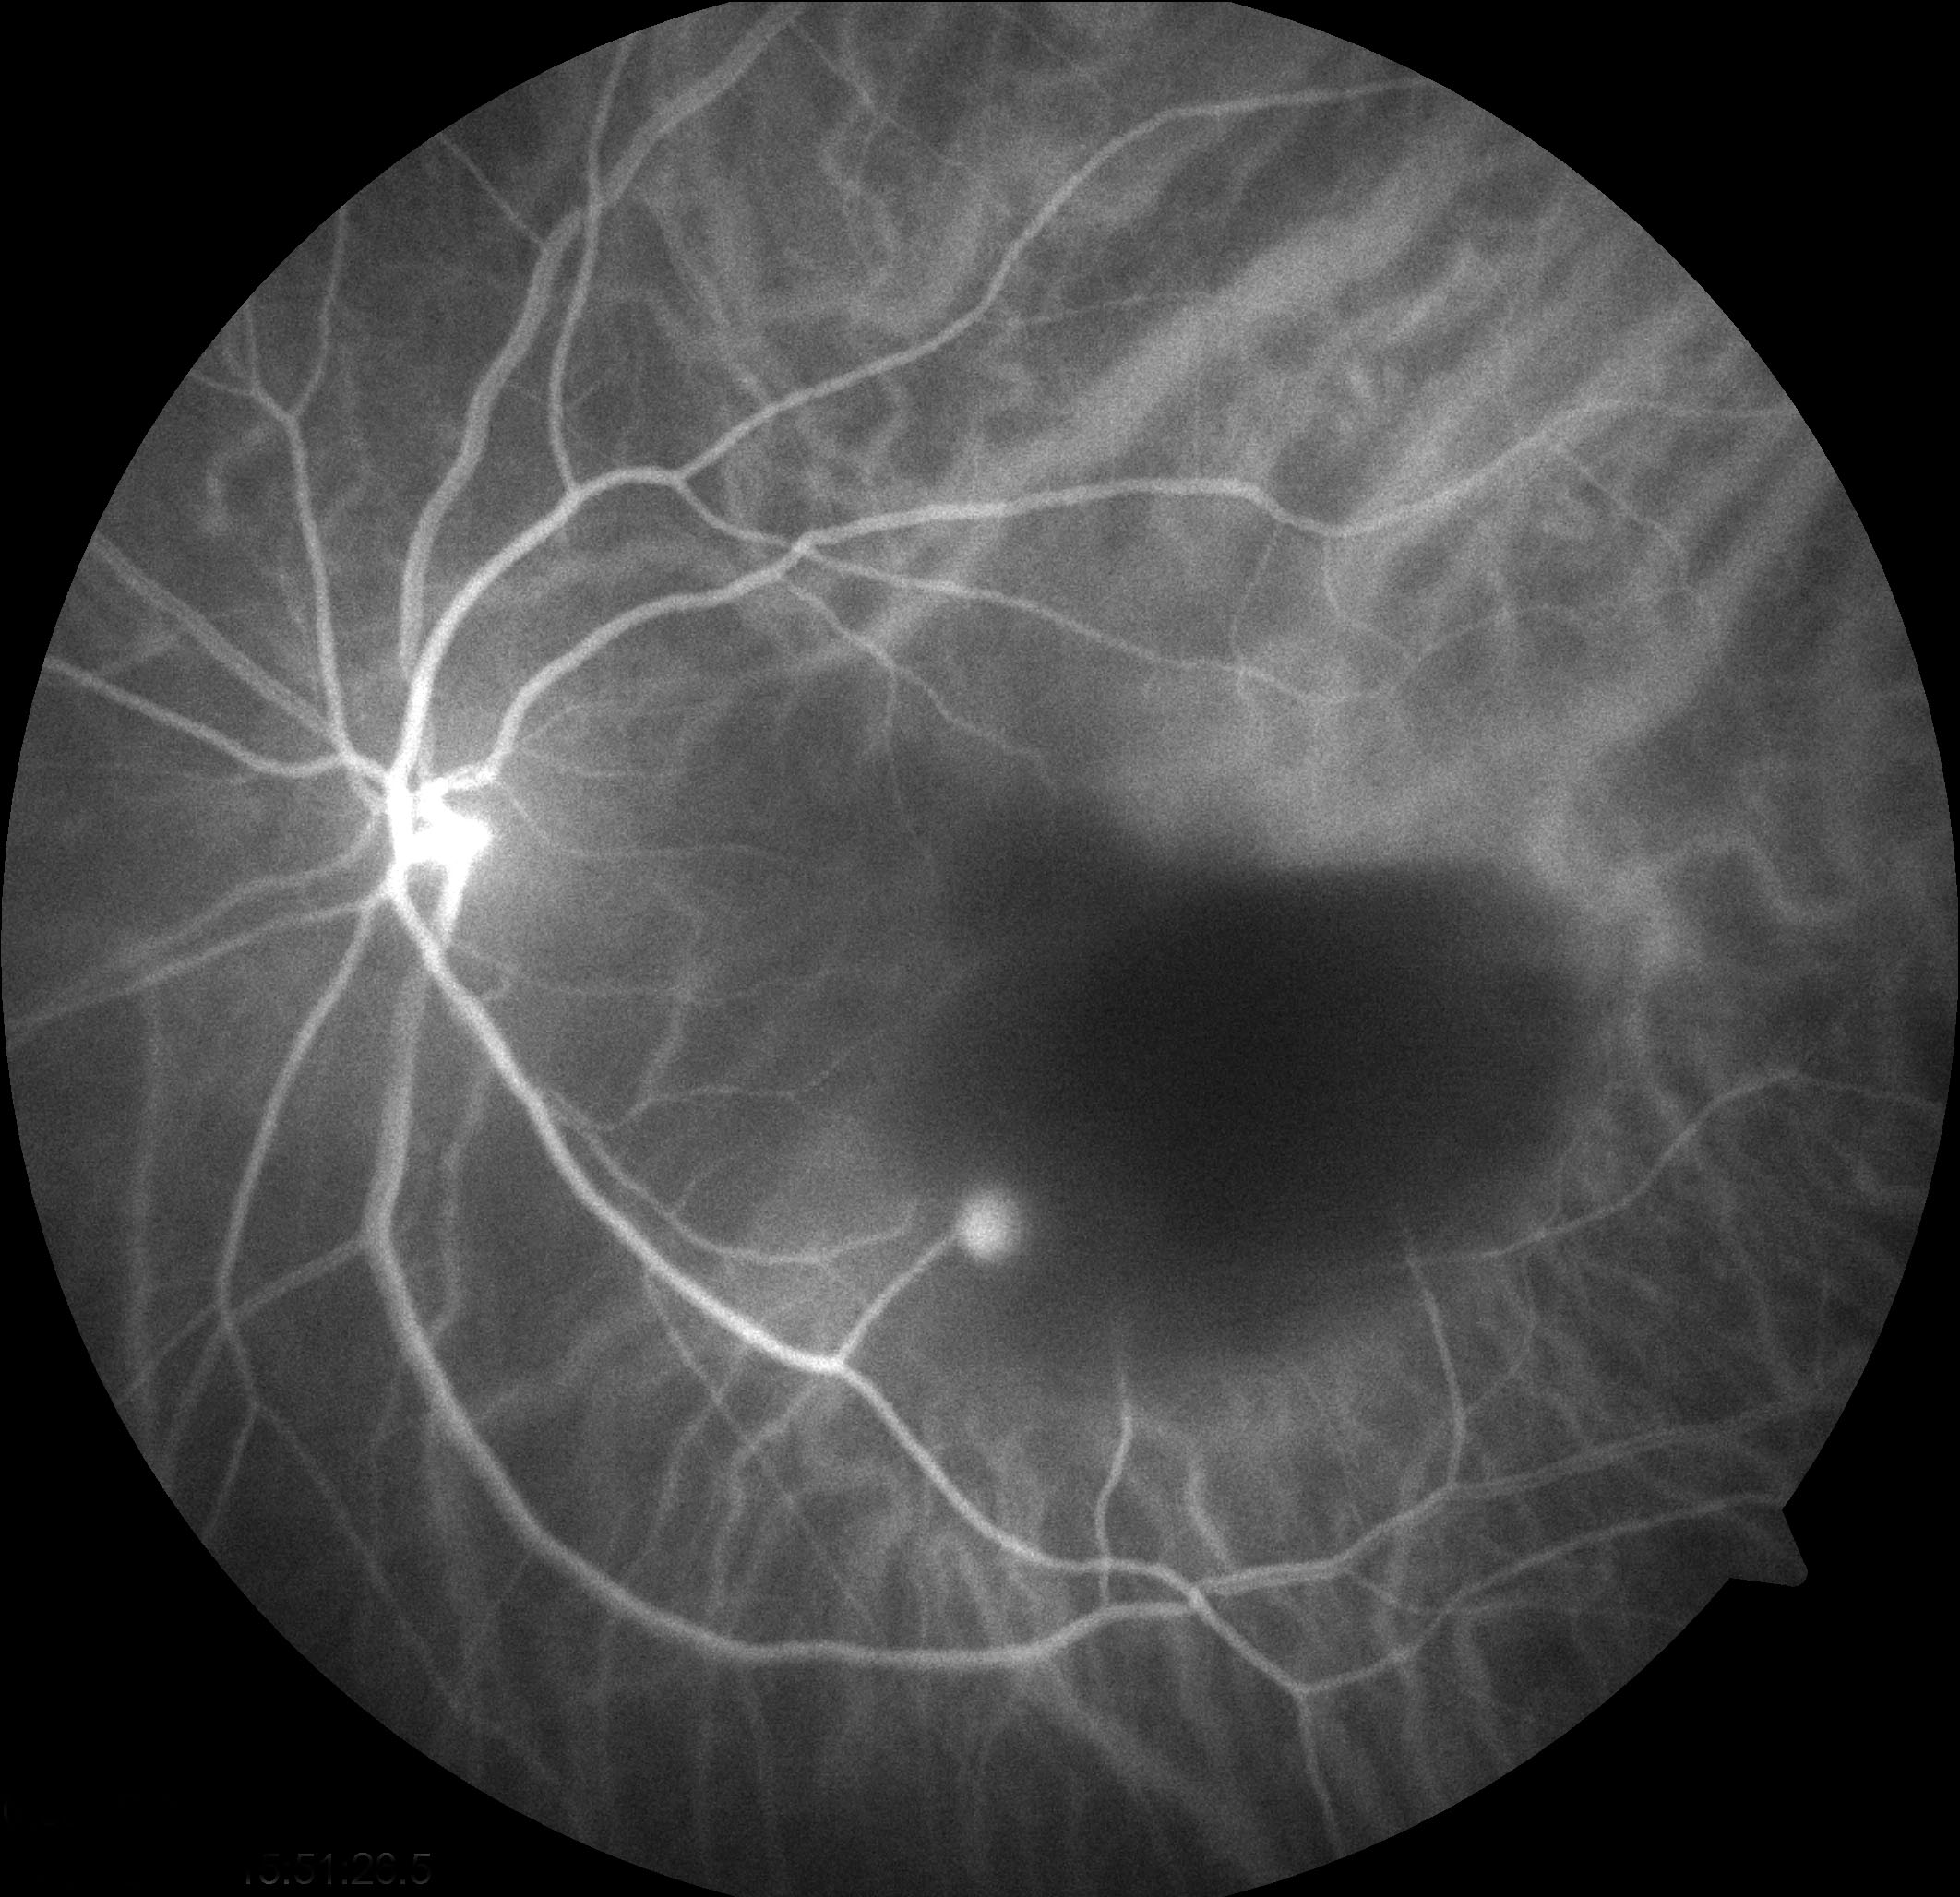 Figure 9.9.7 Ruptured Macroaneurysm
The hyperfluorescent spot represents a macroaneurysm with an adjacent area of retinal haemorrhage.